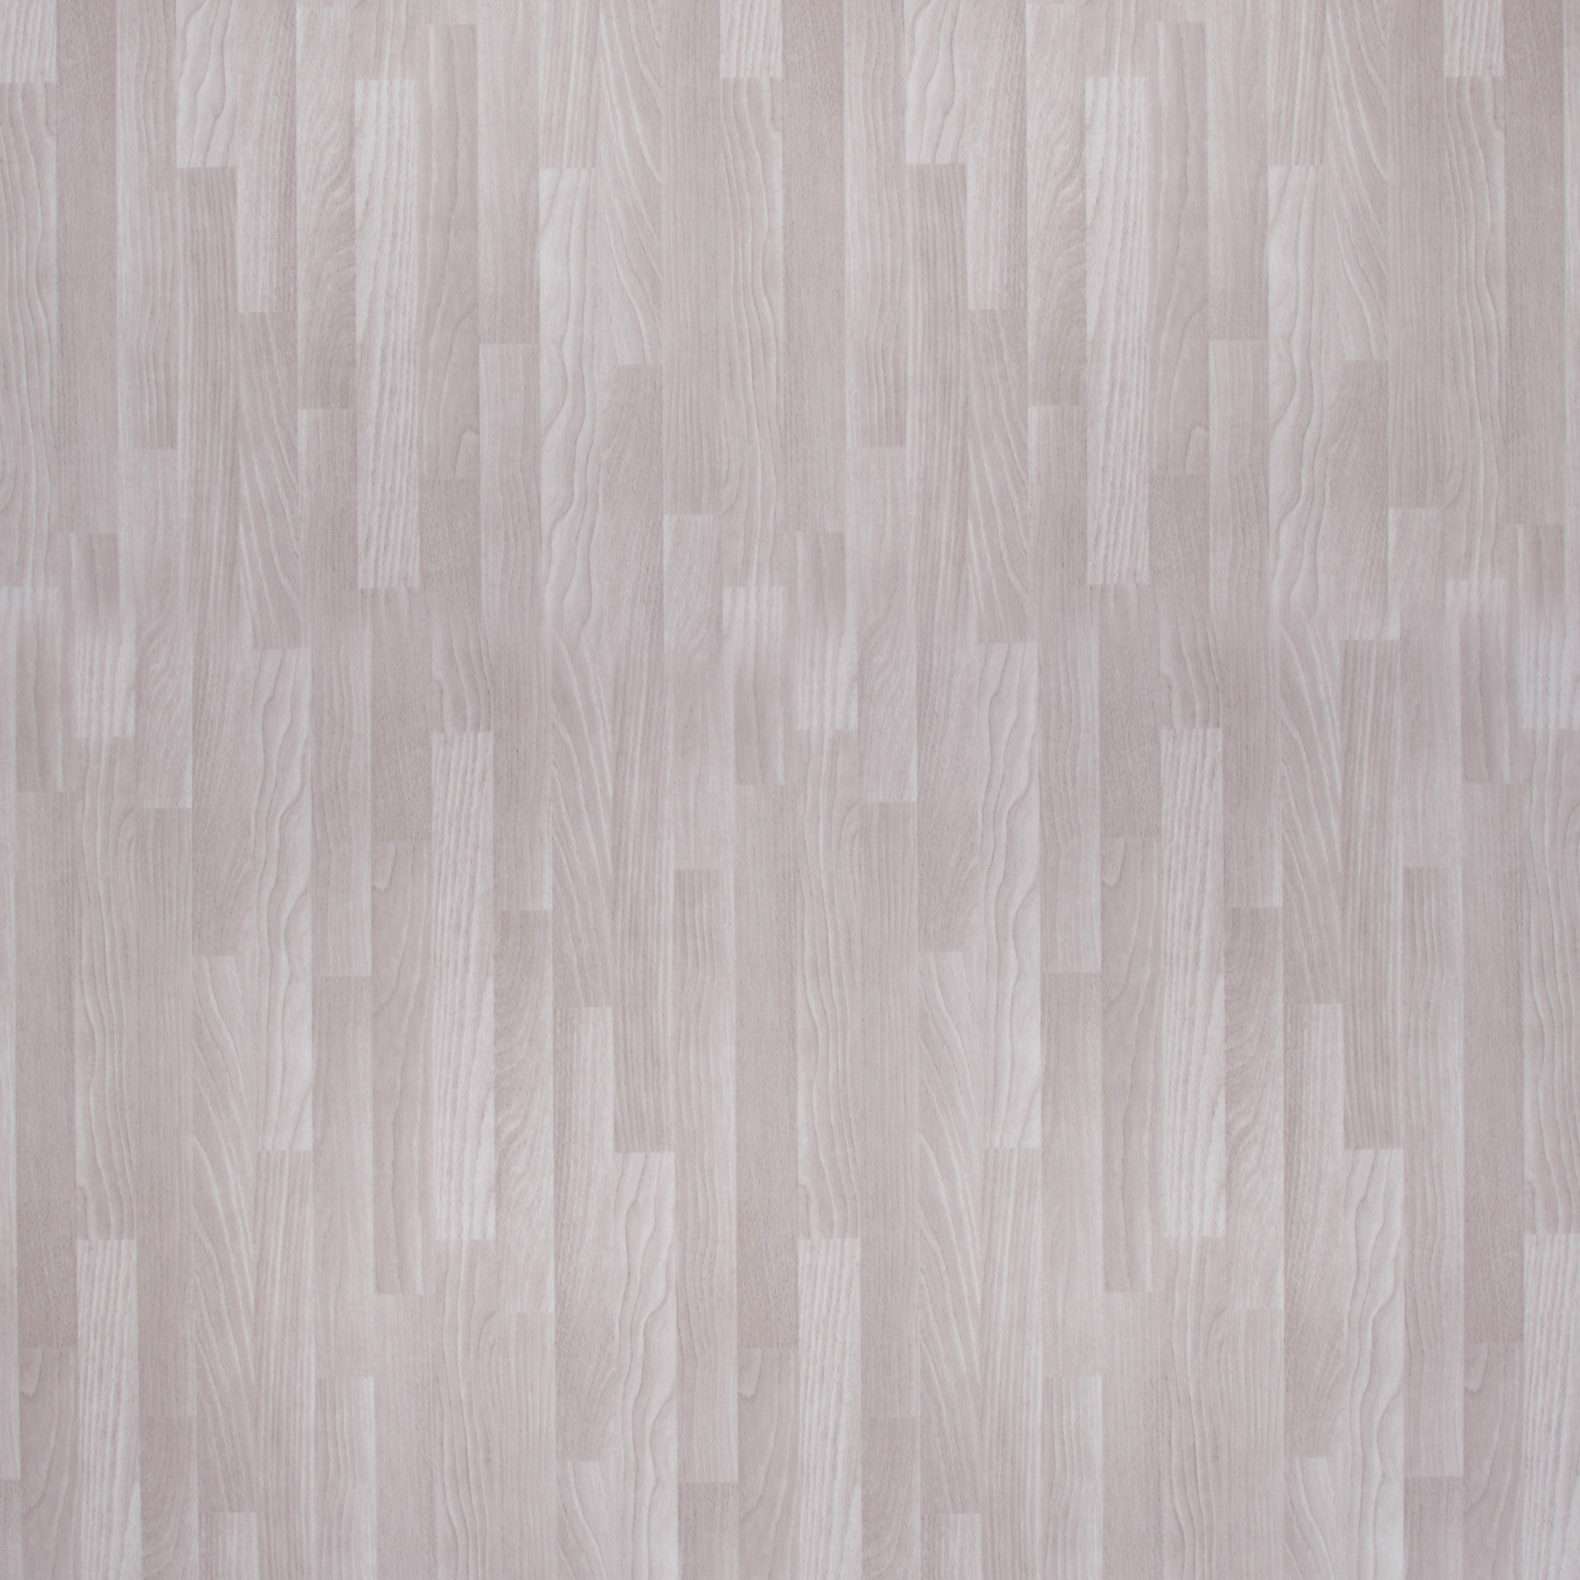 Majestic Warm Gray, a woodgrain resilient vinyl sheet flooring design.